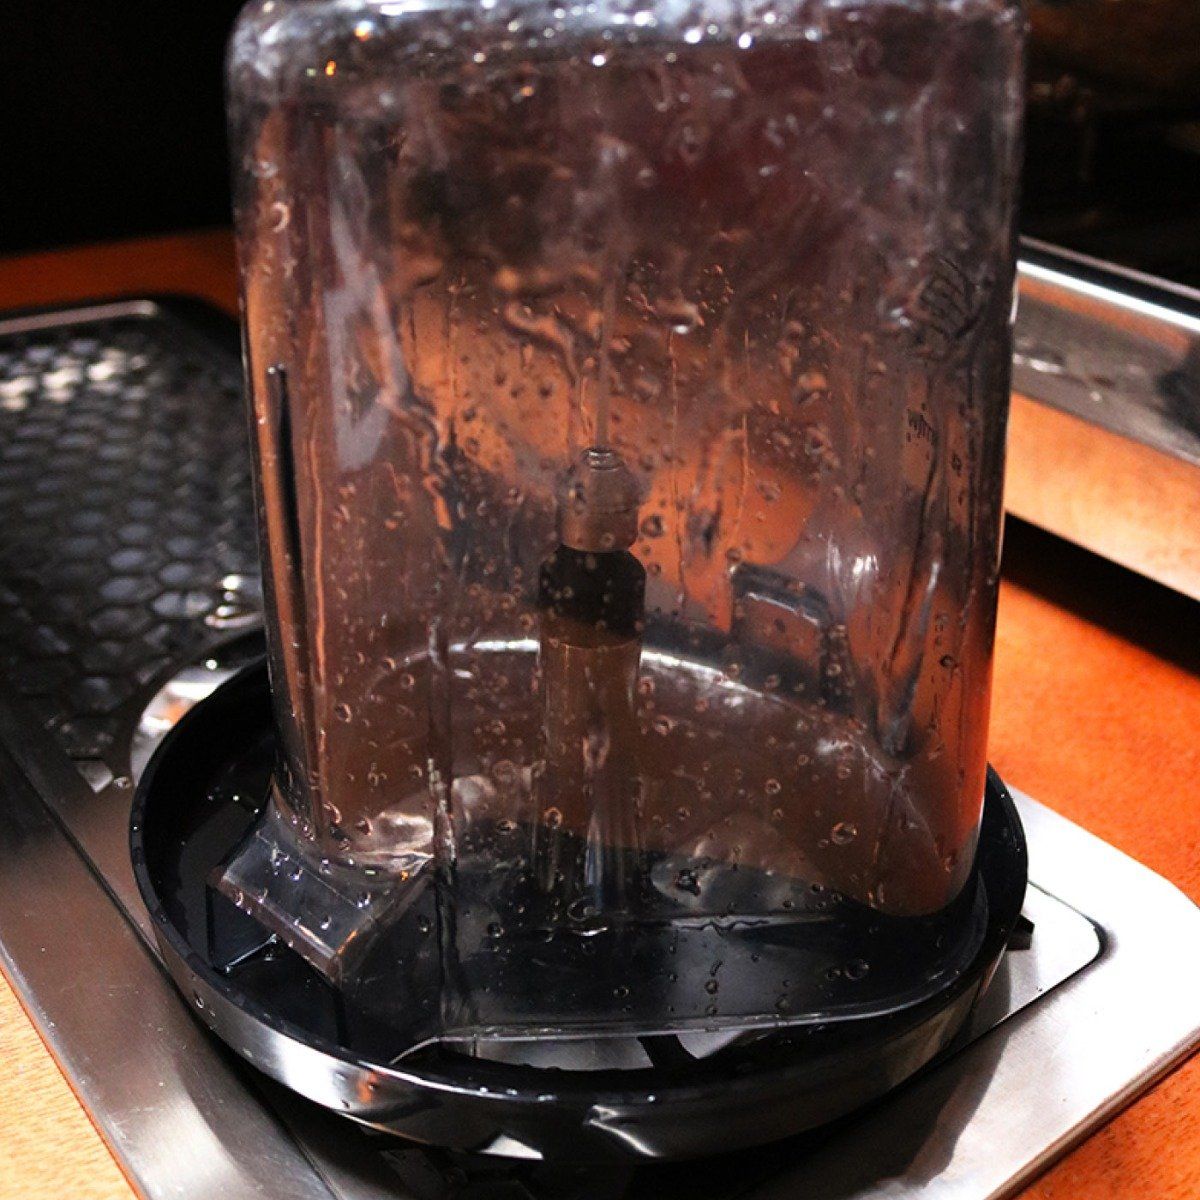 Rhino 水罐冲洗器 - 300 毫米 - 带搅拌器附件的旋转喷嘴。美国国家科学基金会批准